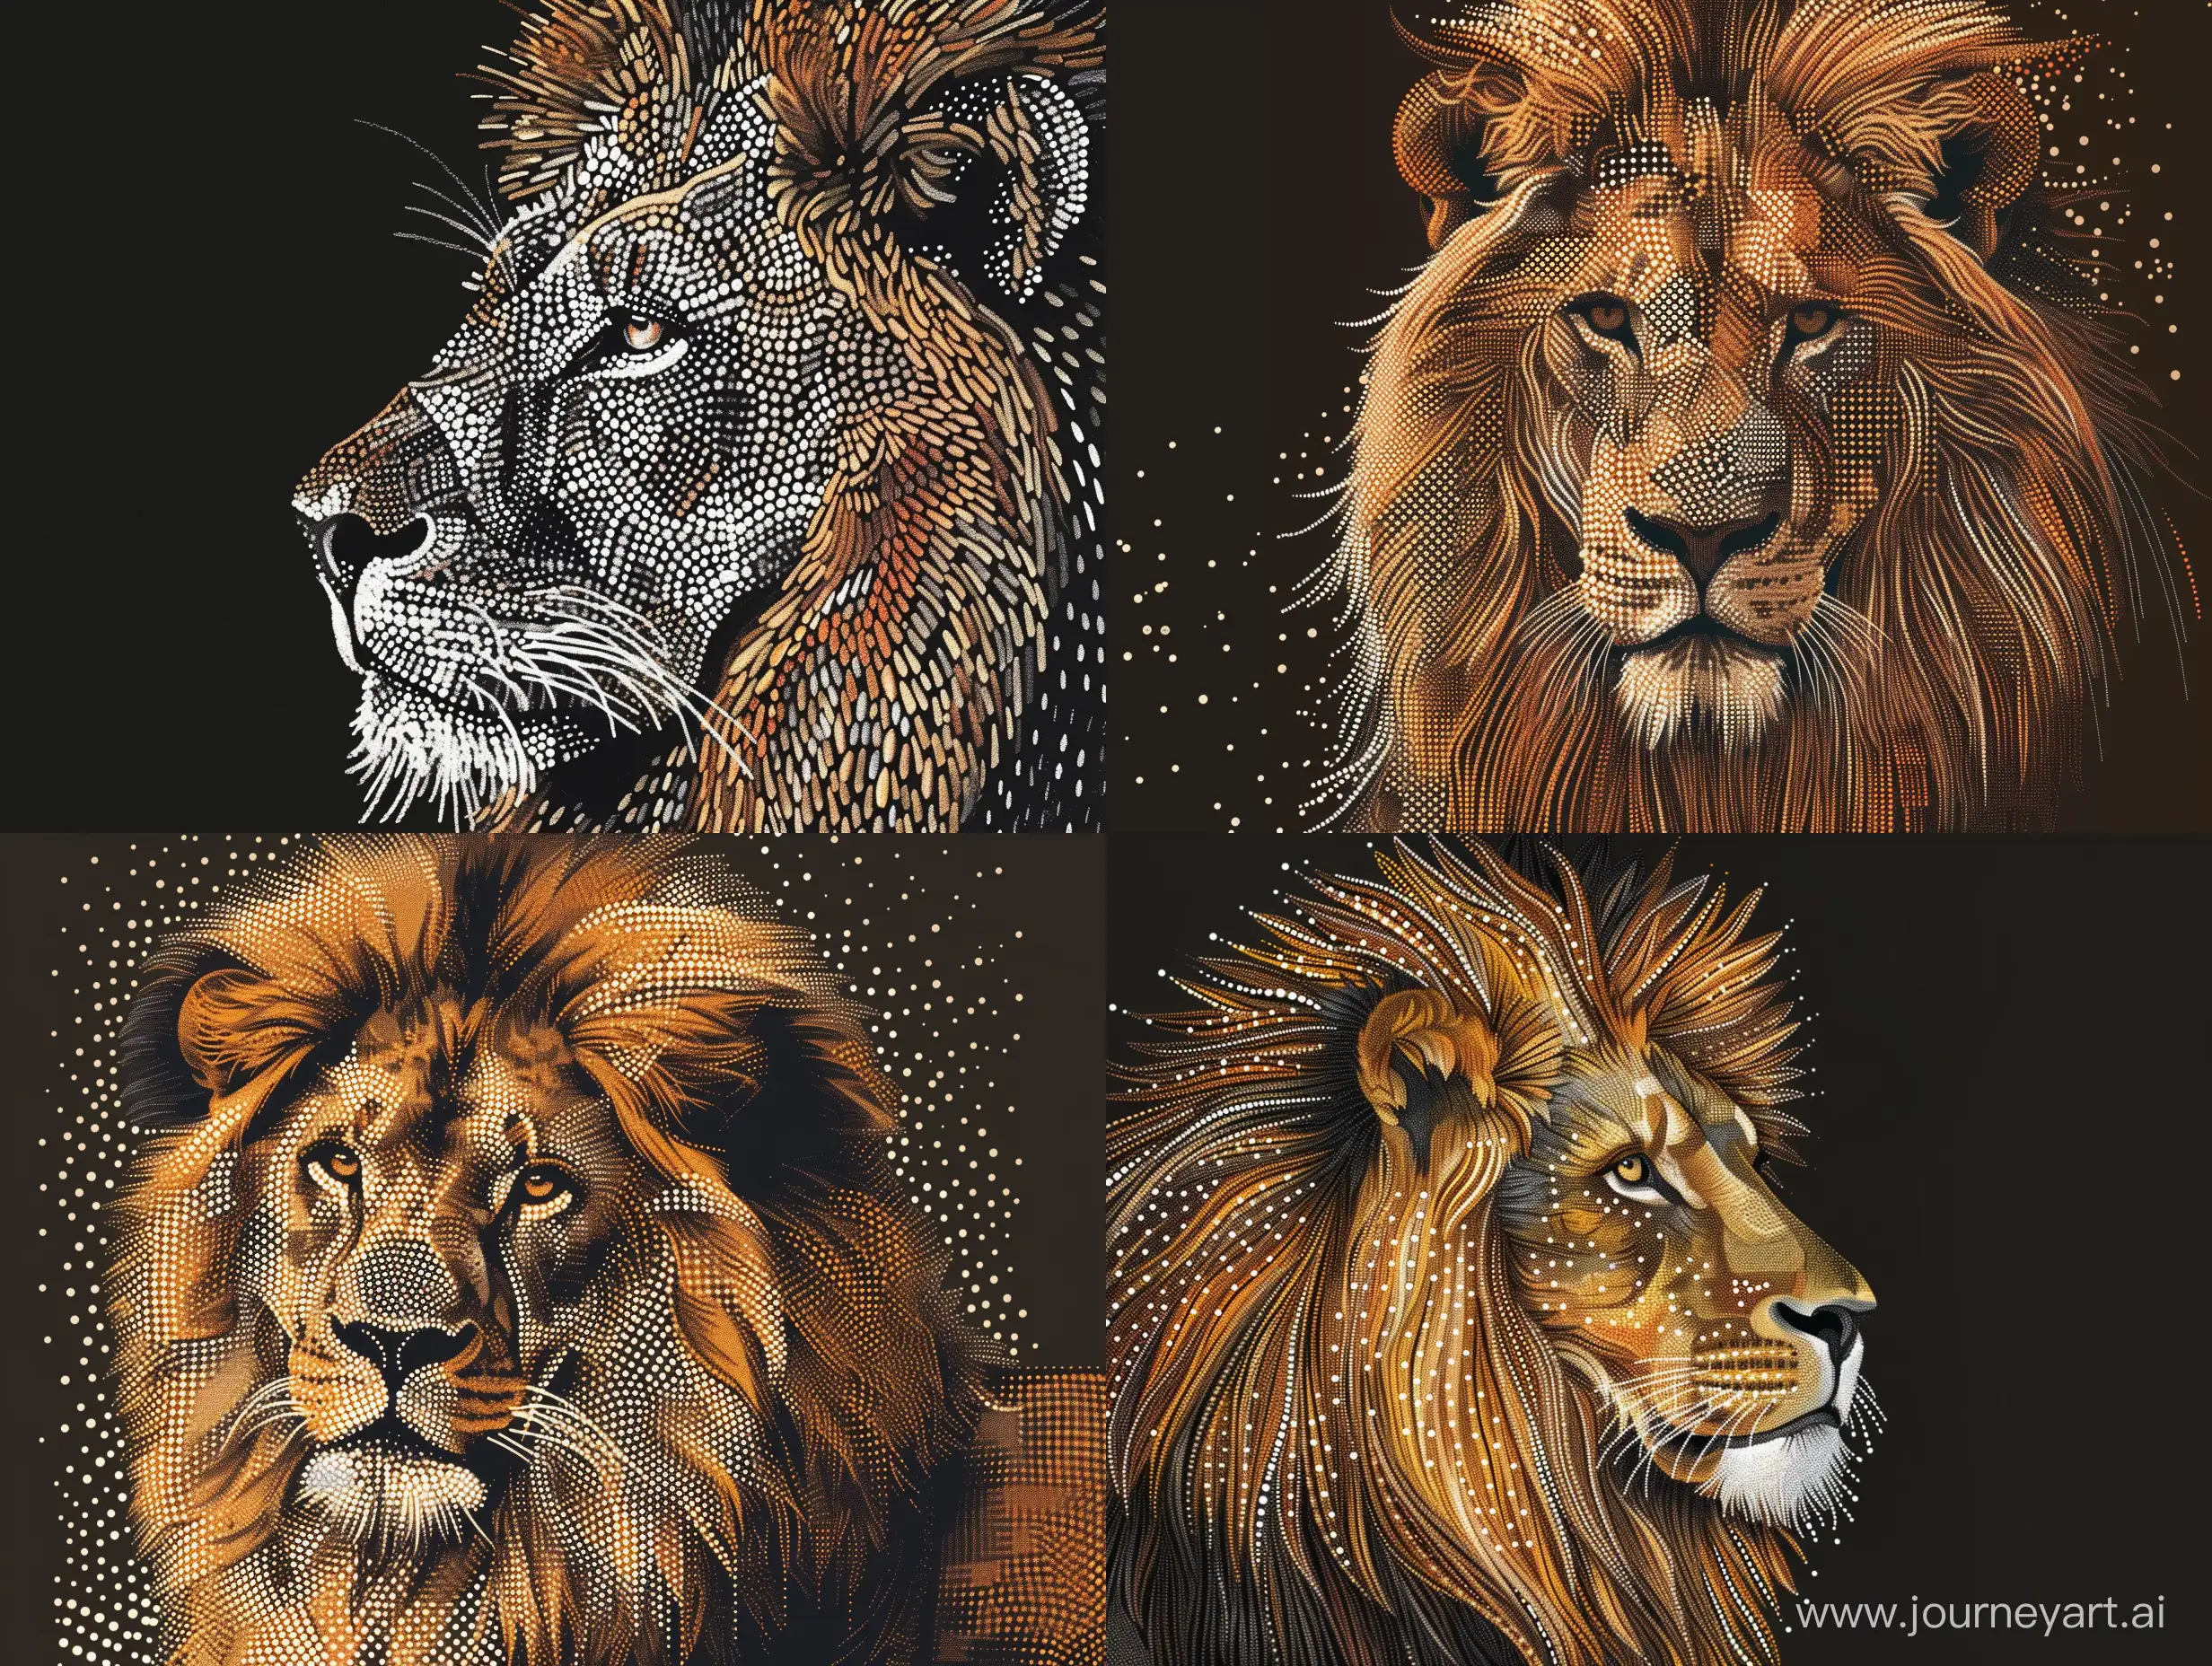 Majestic-Lion-Artwork-in-Ethereal-White-Dot-Illustration